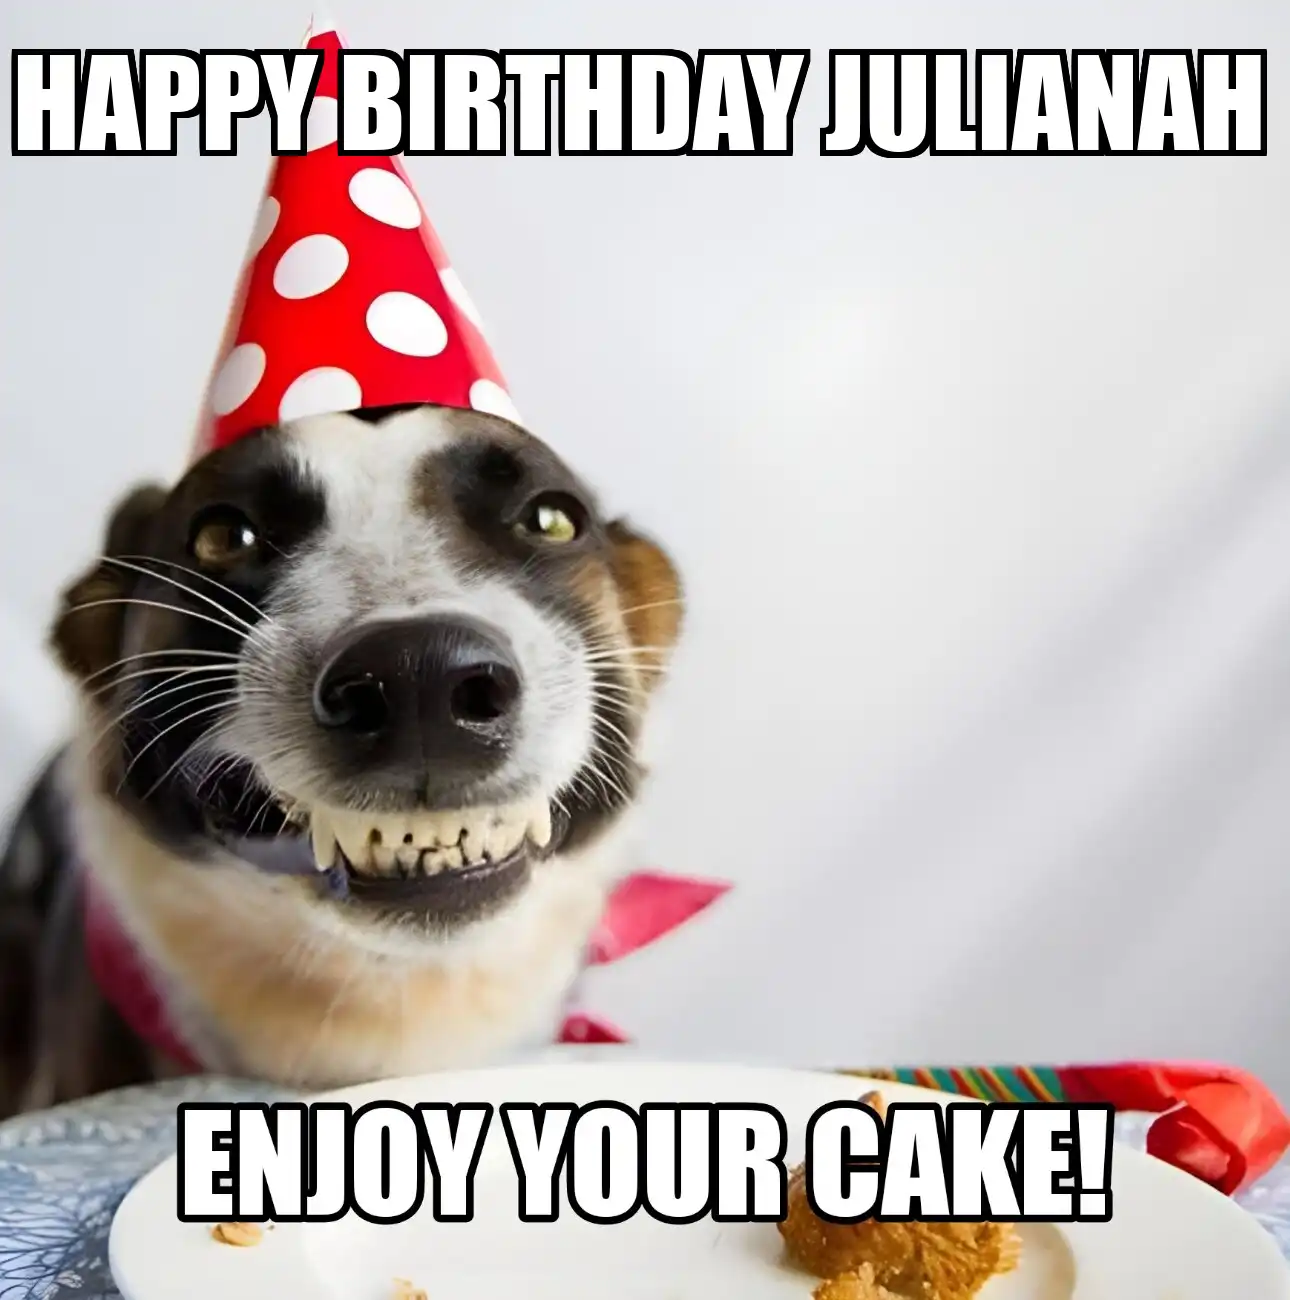 Happy Birthday Julianah Enjoy Your Cake Dog Meme